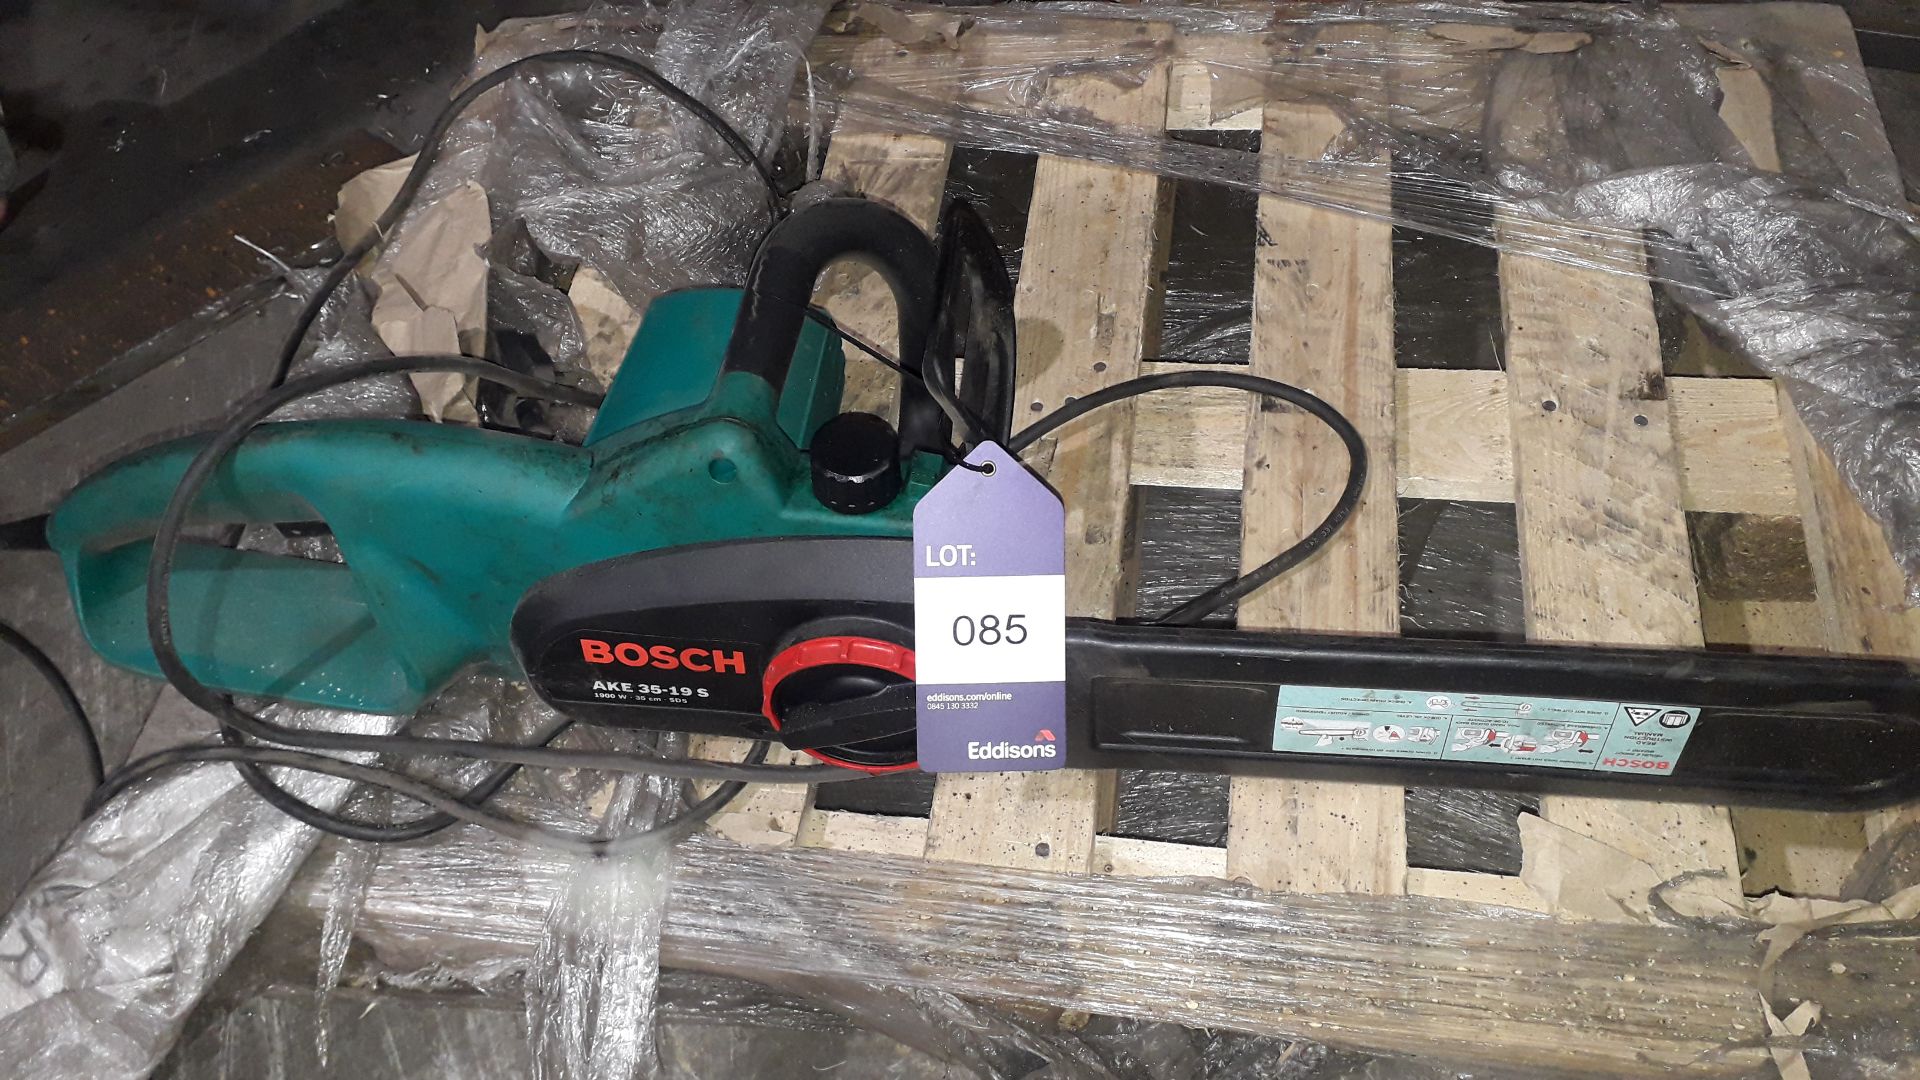 Bosch AKE 36 19S Chain Saw, 240v